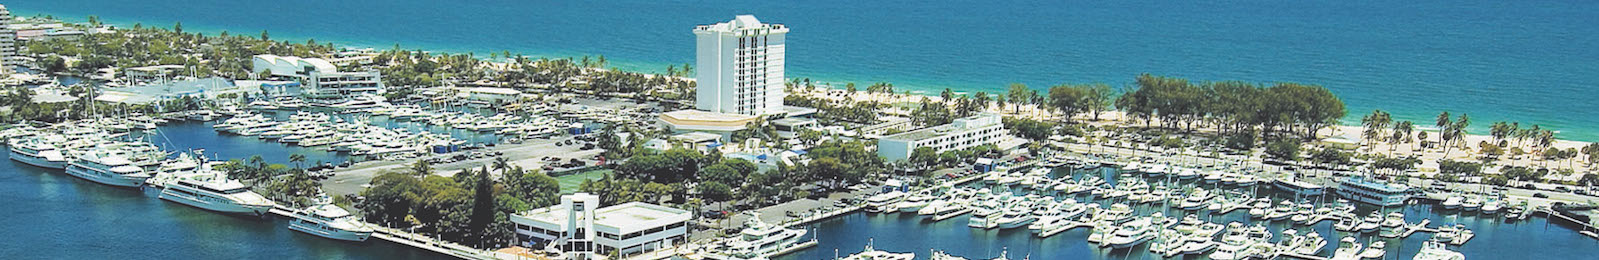 Bahia Mar Marina – Fort Lauderdale, FL